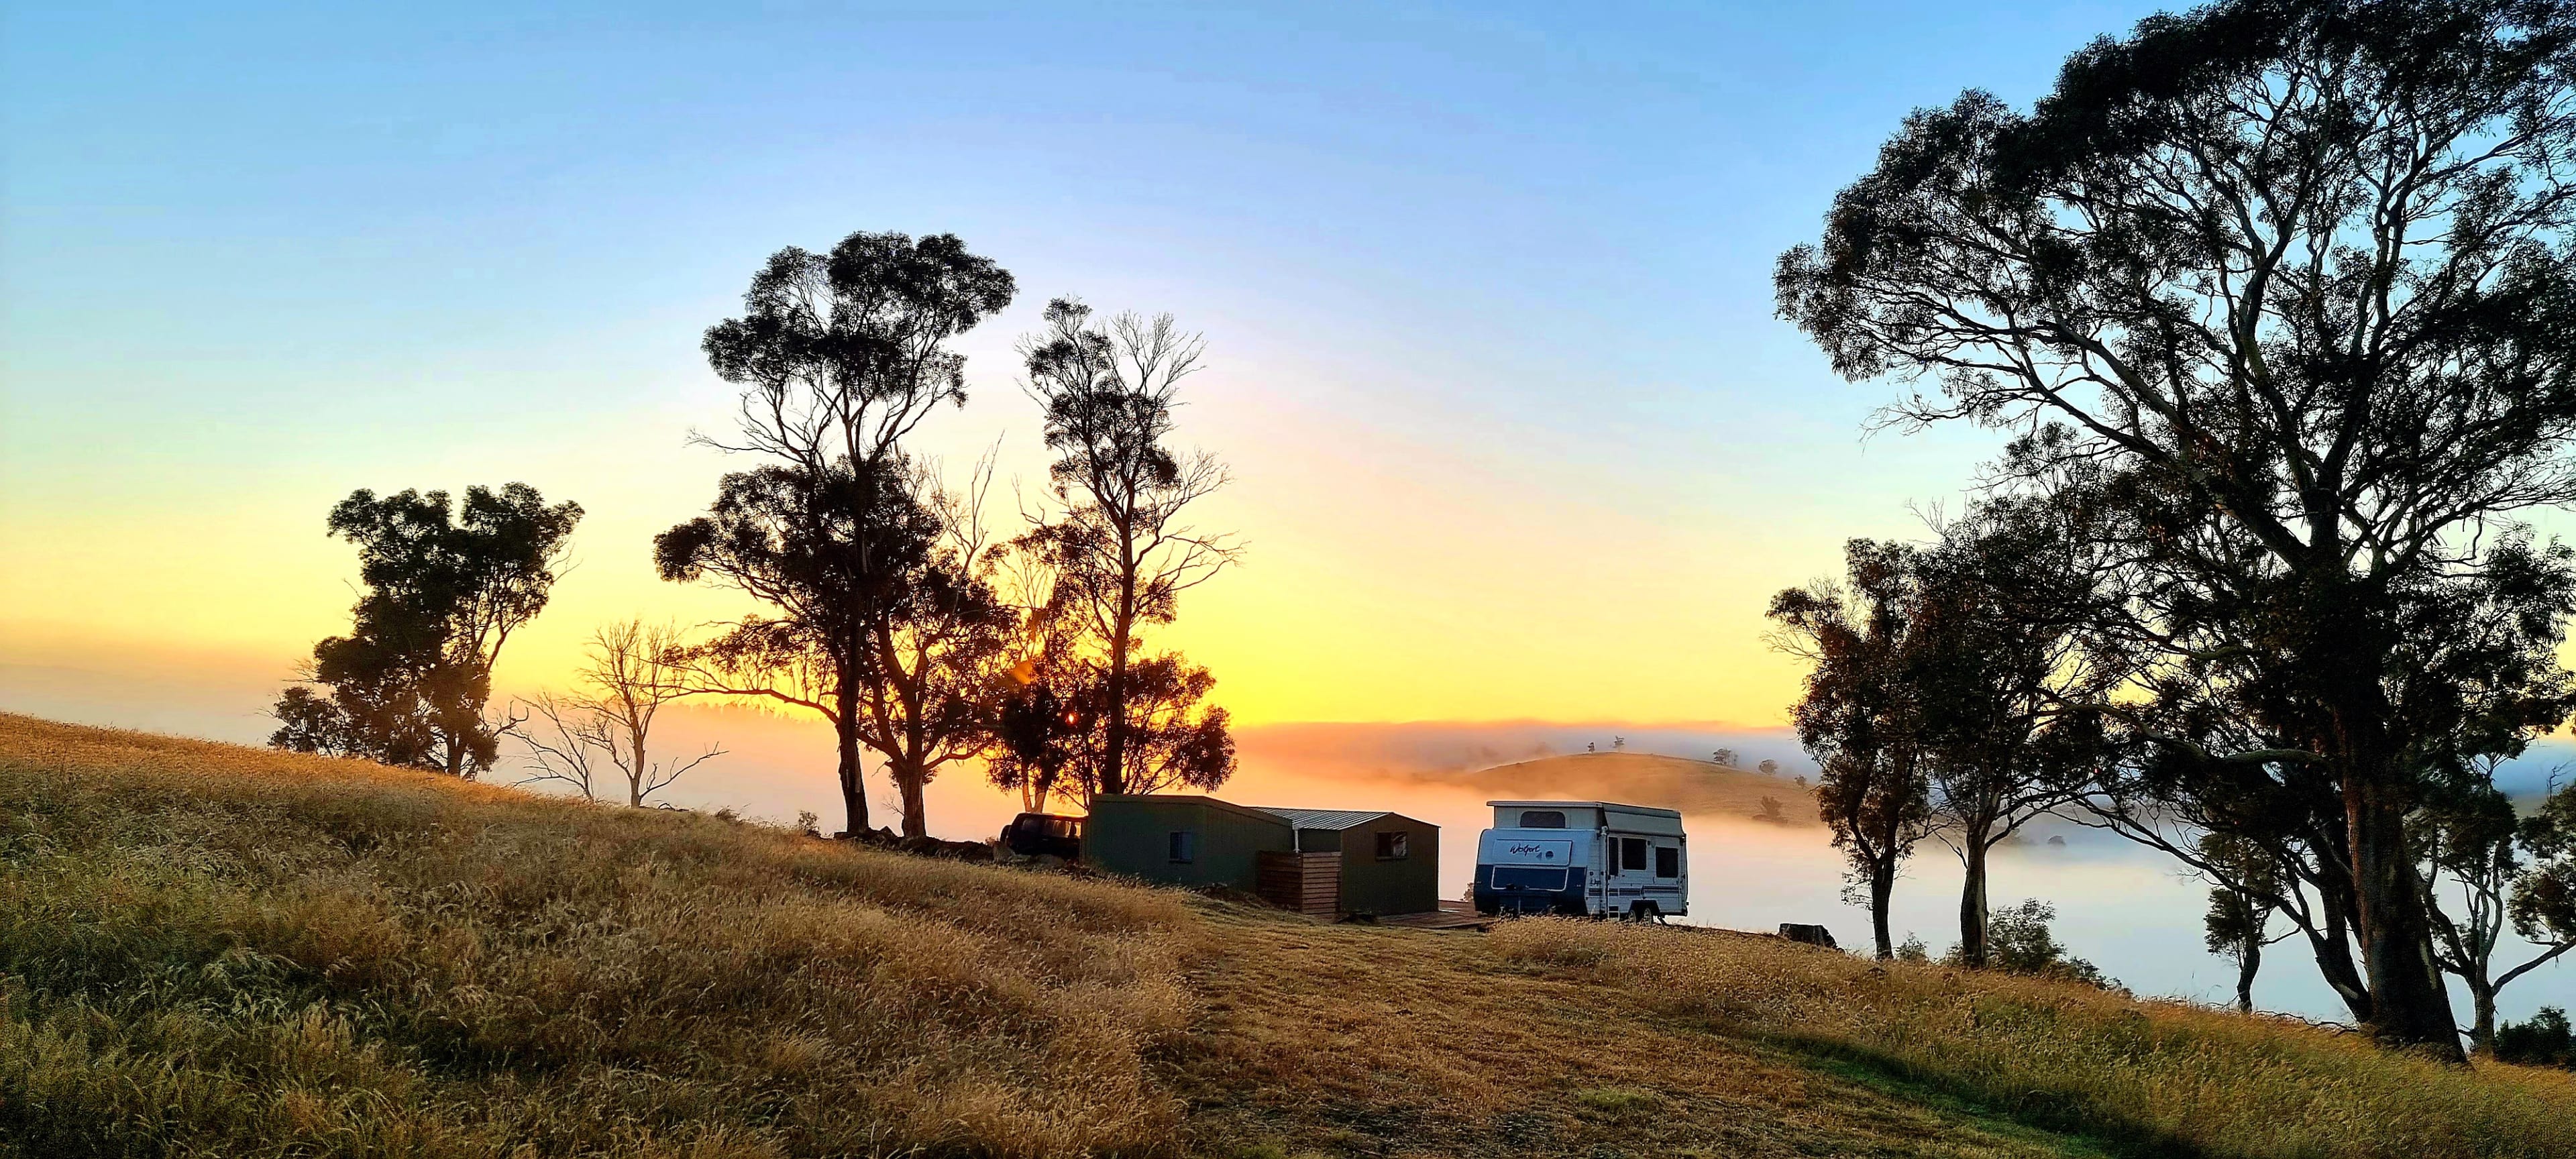 Cabin and van at sunrise